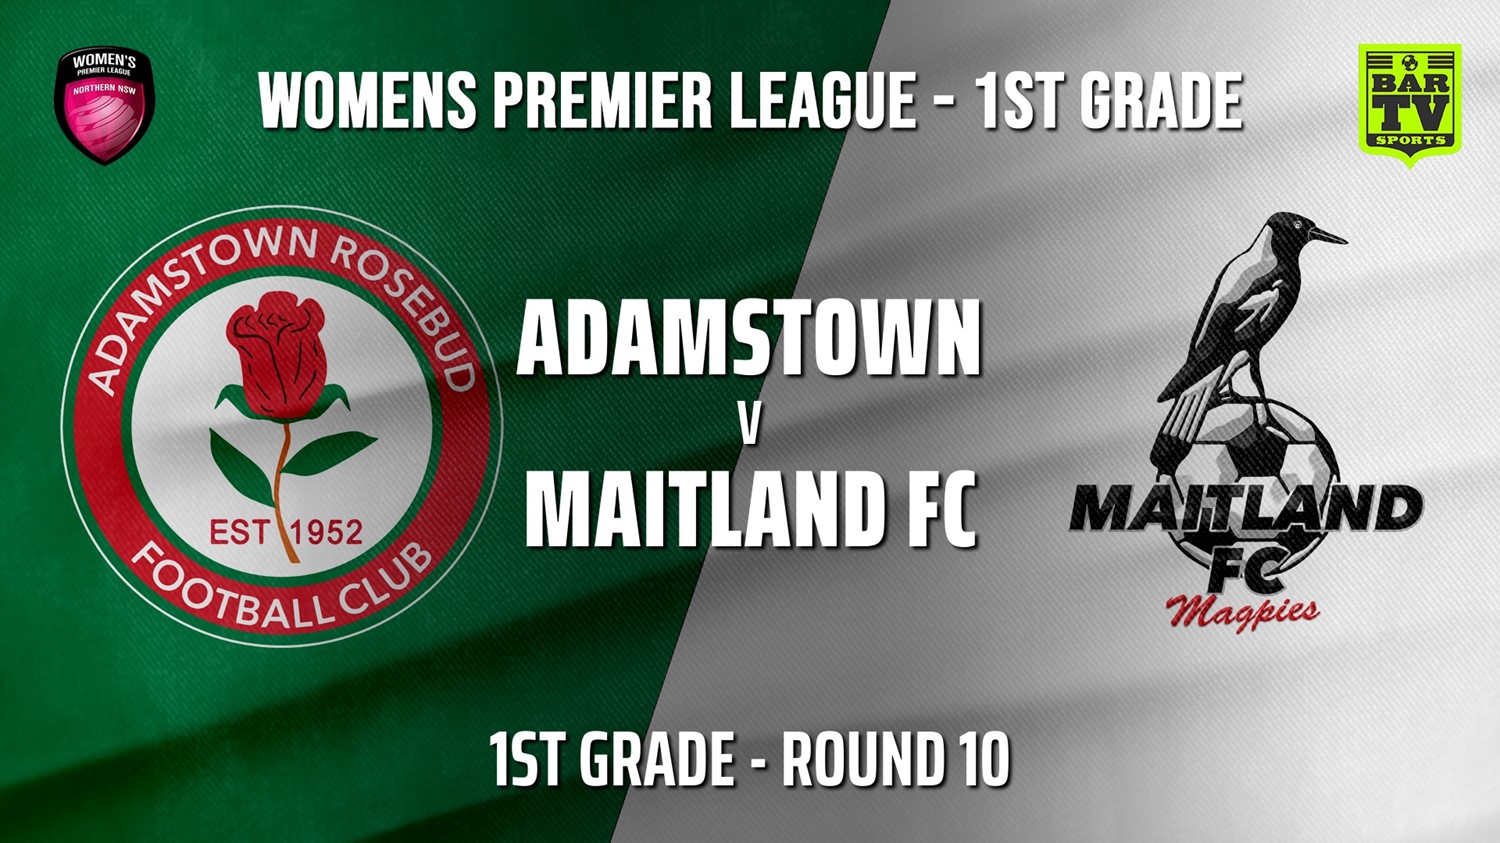 210606-Herald Women’s Premier League Round 10 - 1st Grade - Adamstown Women v Maitland FC (women) Slate Image